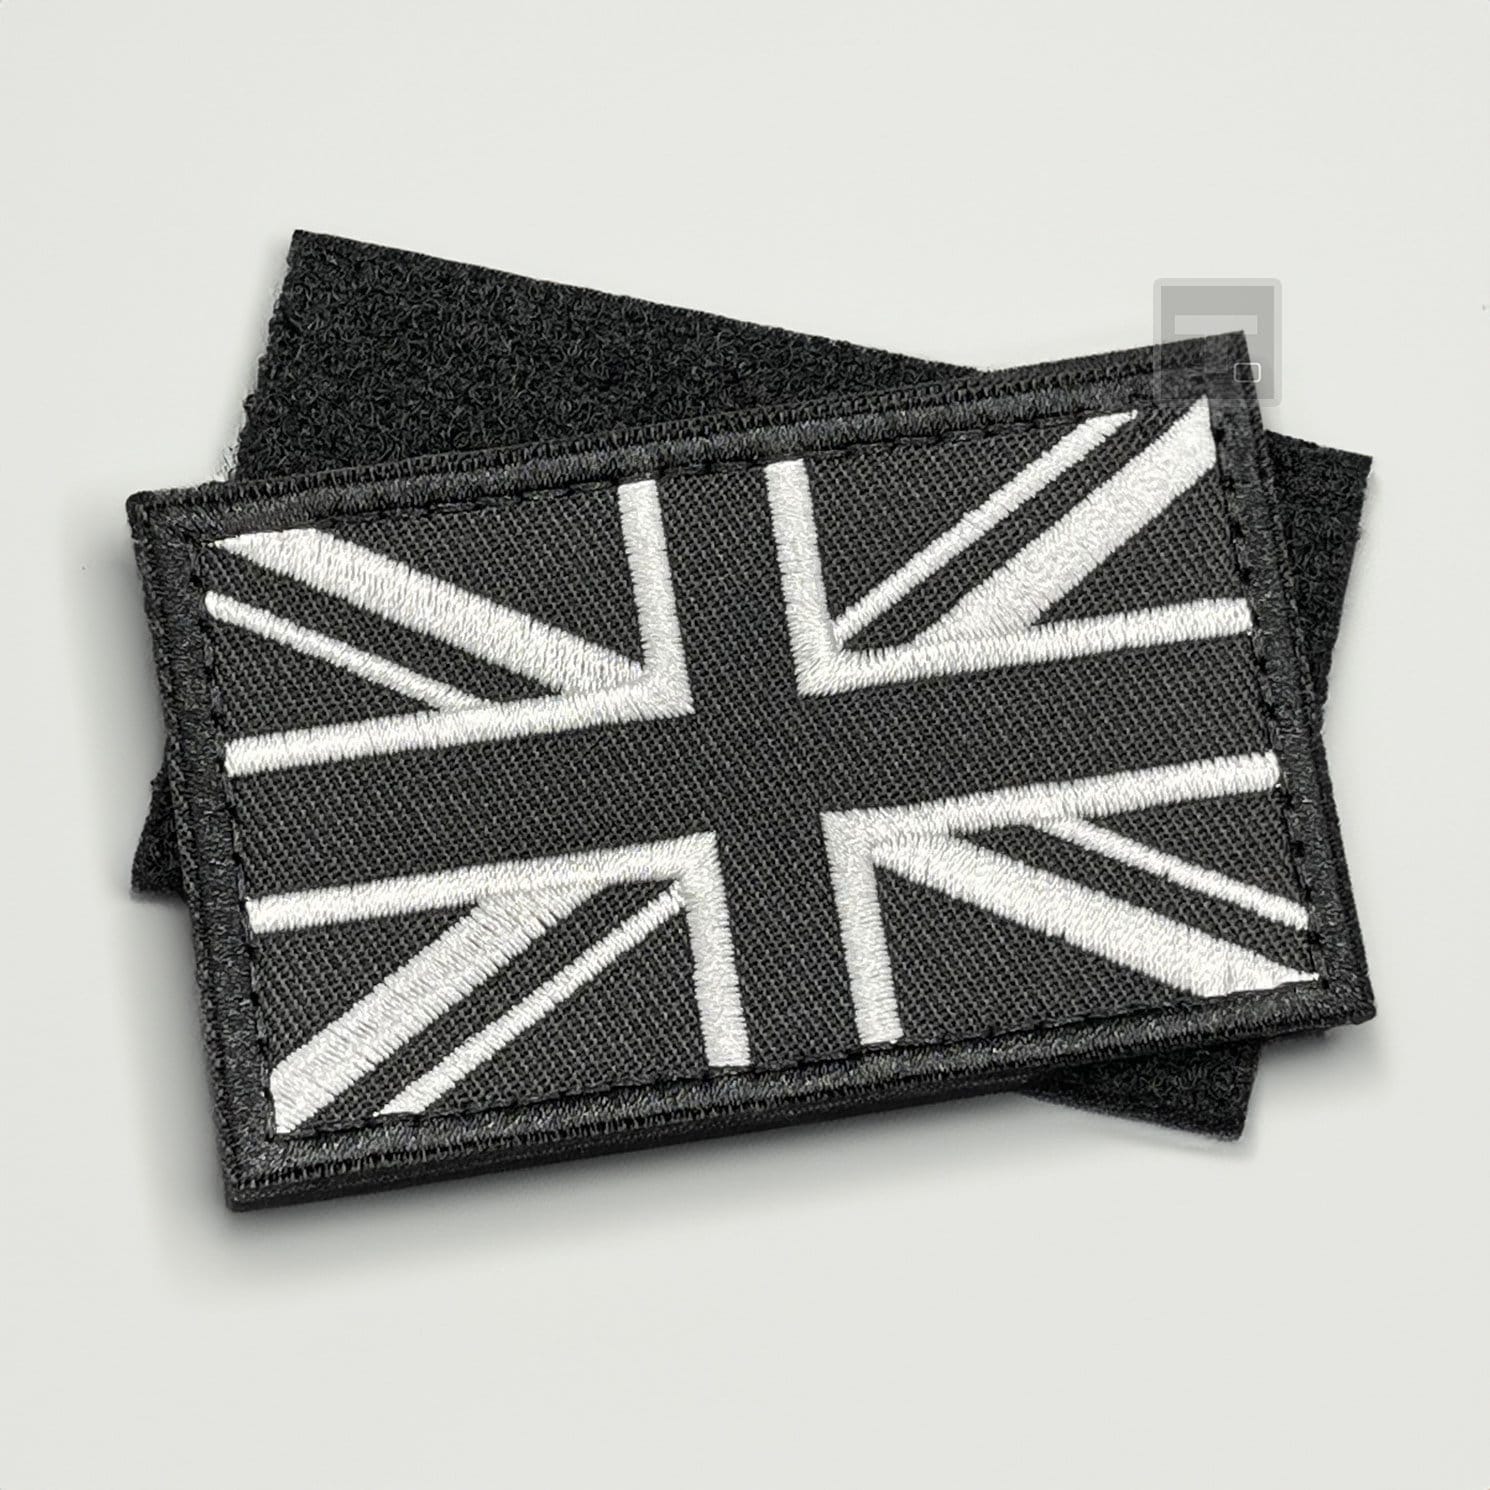 Eye-catching Union Jack England UK Flag Patch Print Stretch